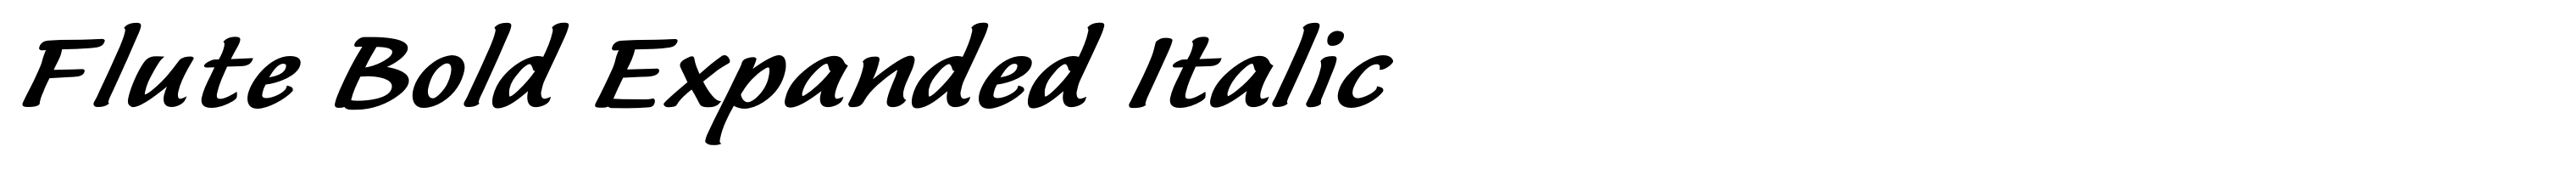 Flute Bold Expanded Italic